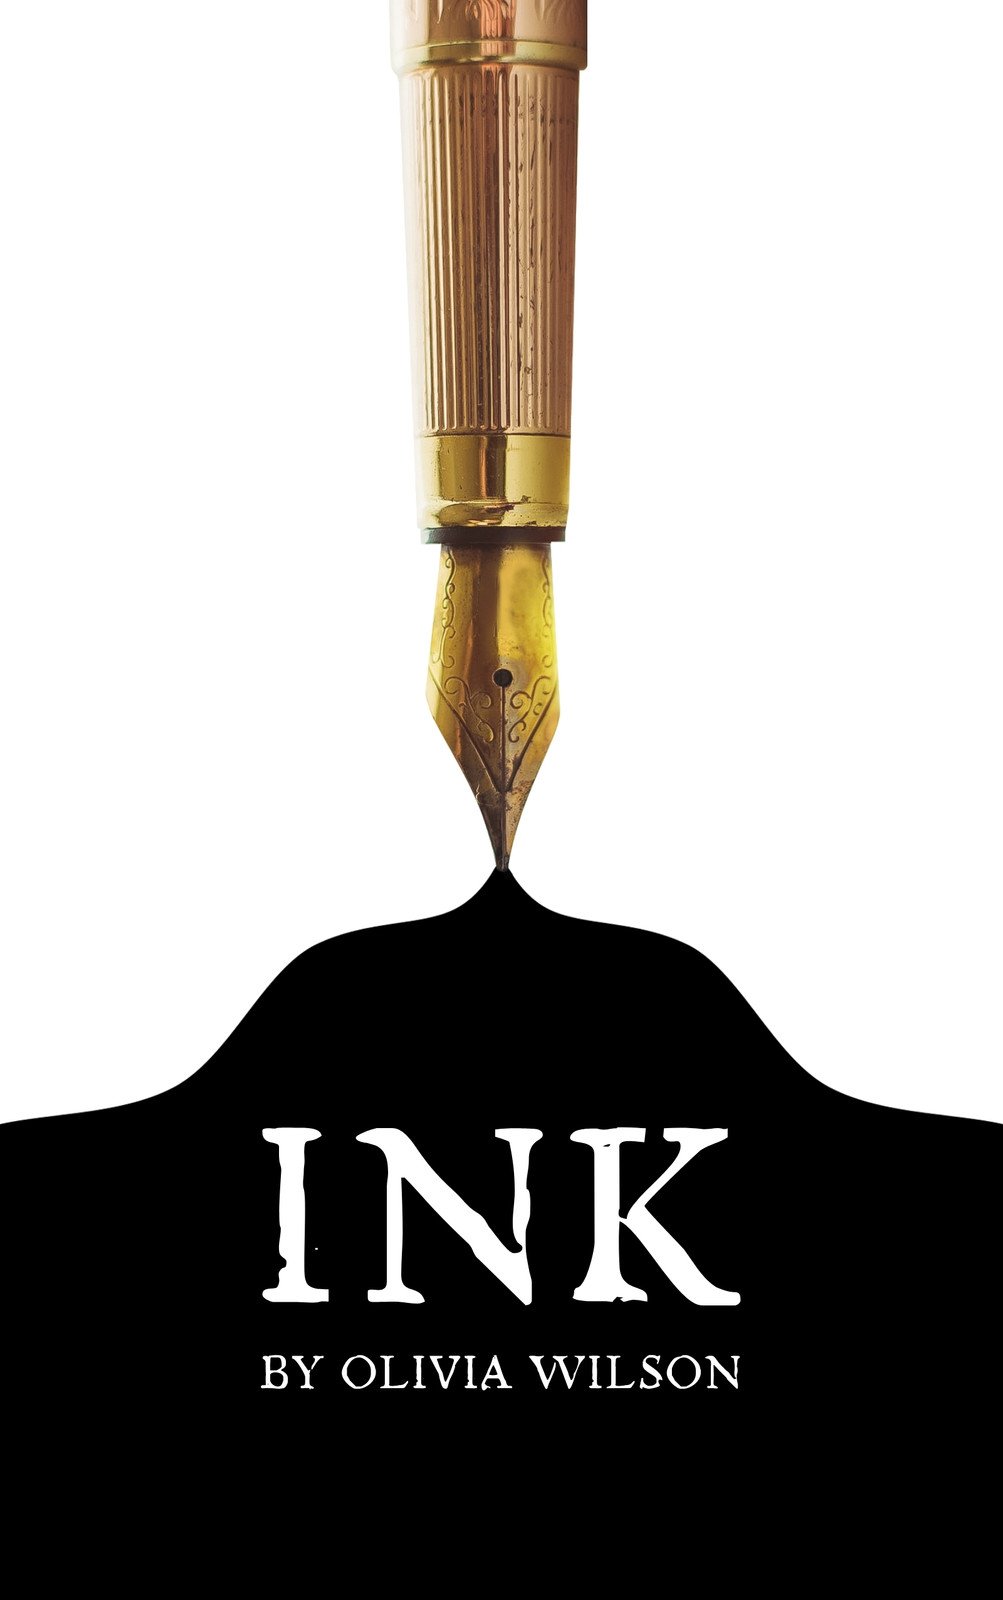 Book pen logo education design Royalty Free Vector Image